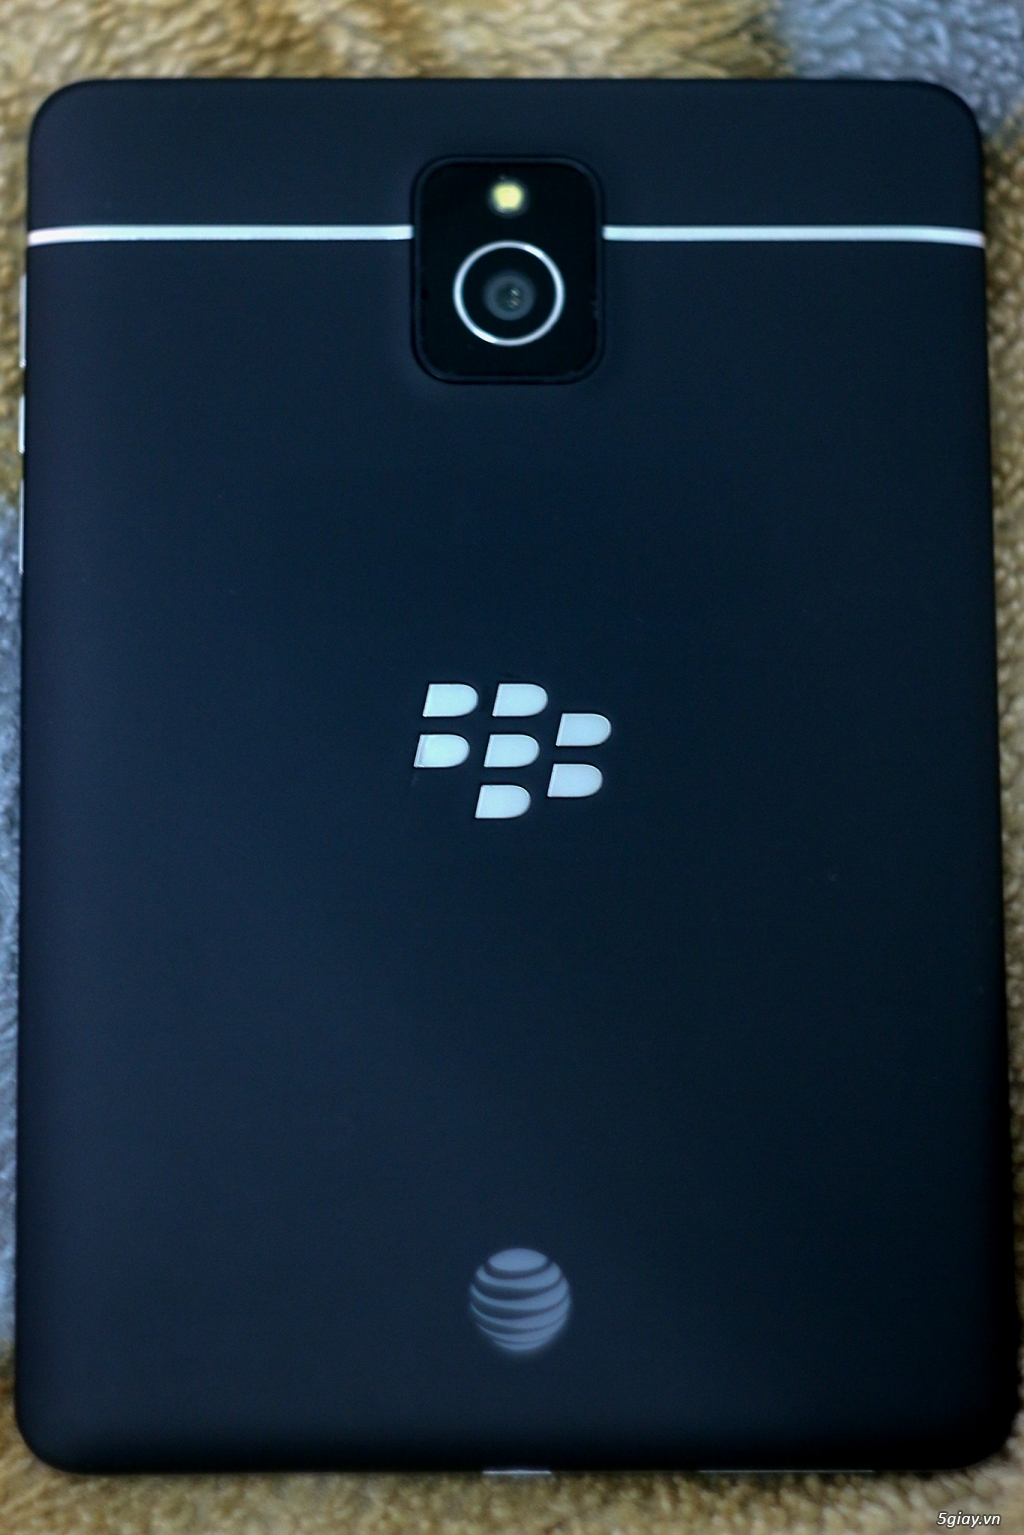 Bán Blackberry passport hoặc giao lưu Iphone 5s,6,6s